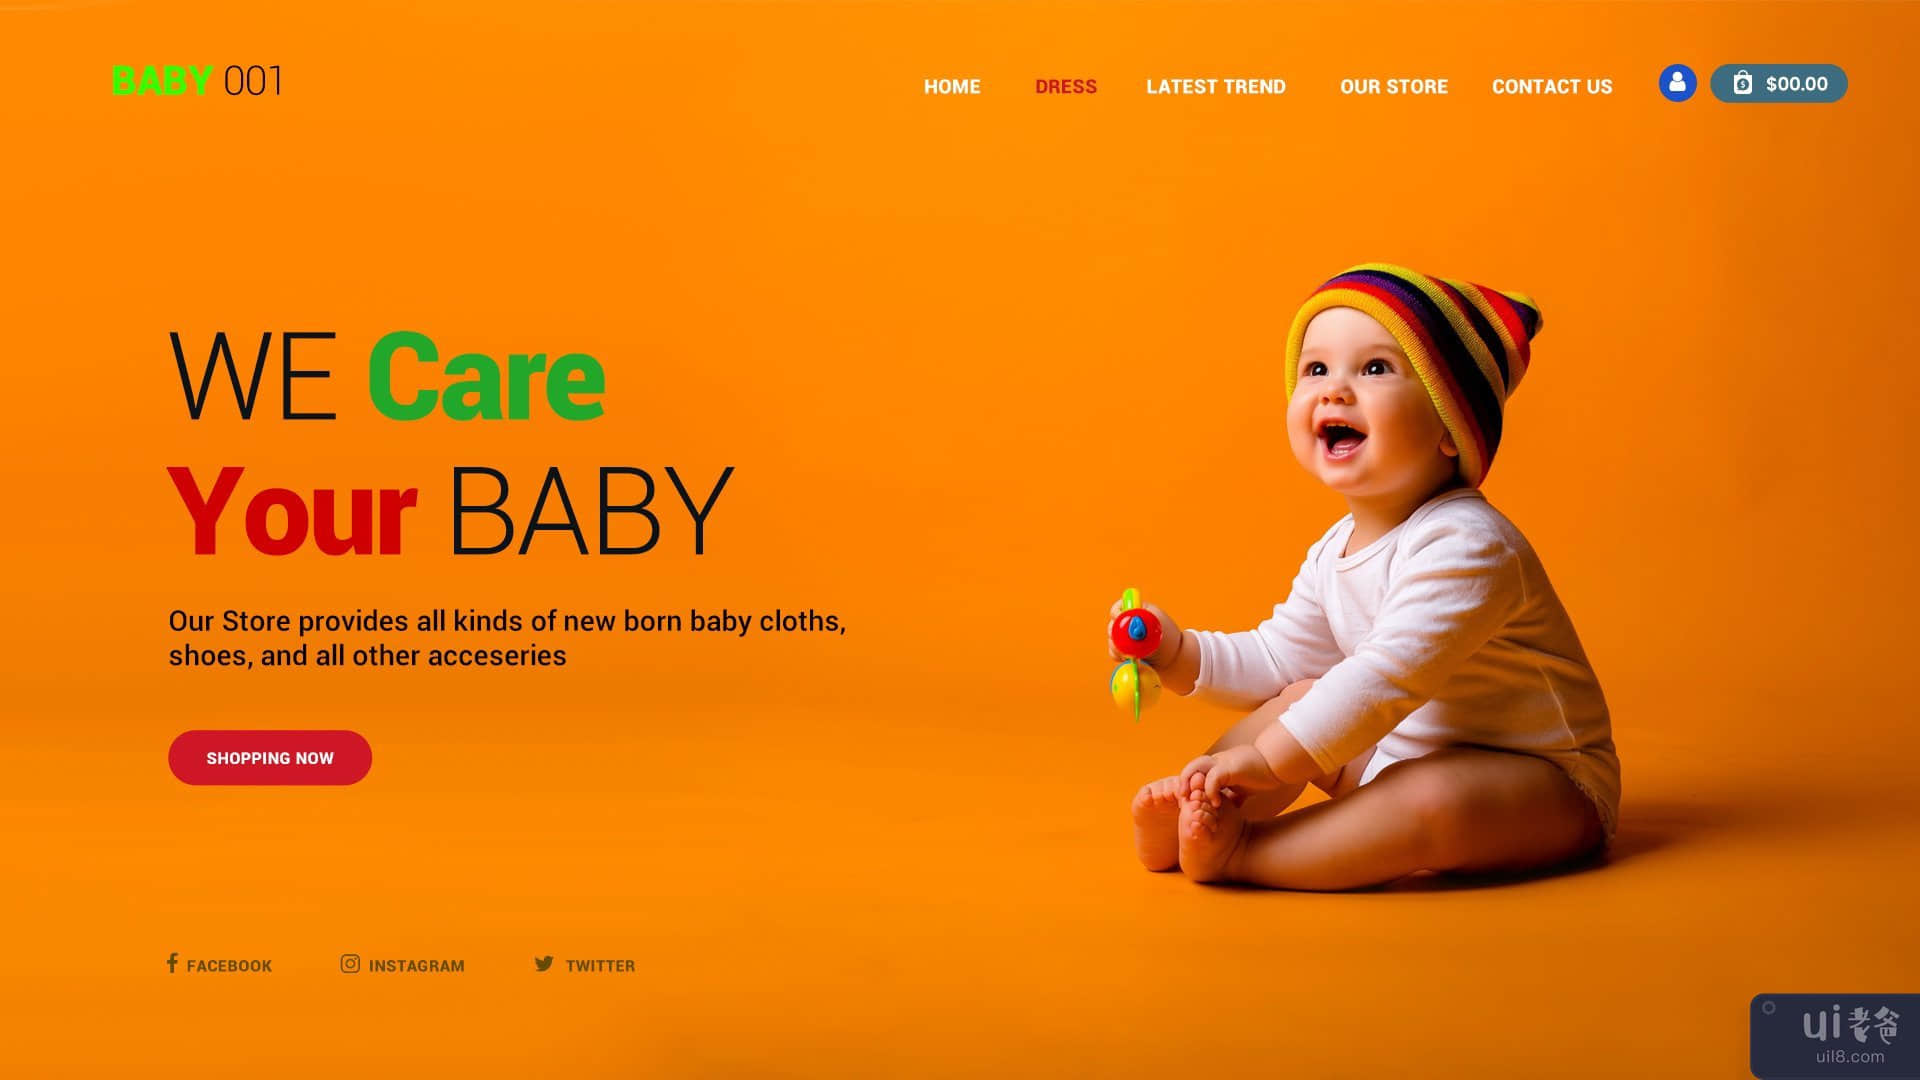 婴儿护理登陆页面(BABY Care Landing Page)插图2